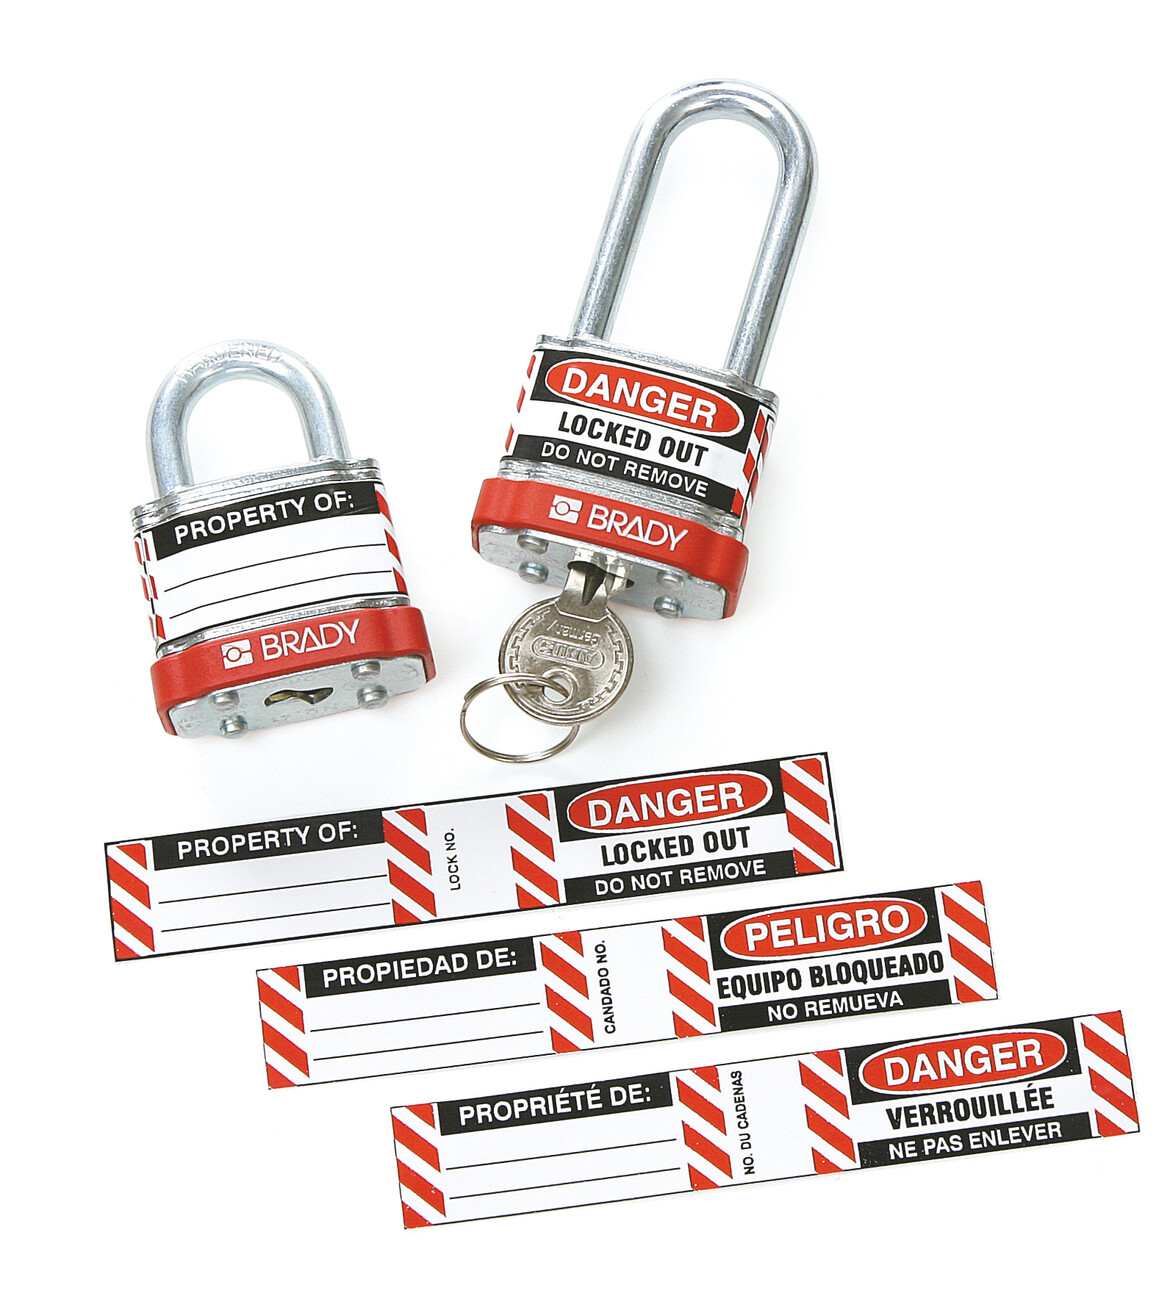 Labels for steel padlocks